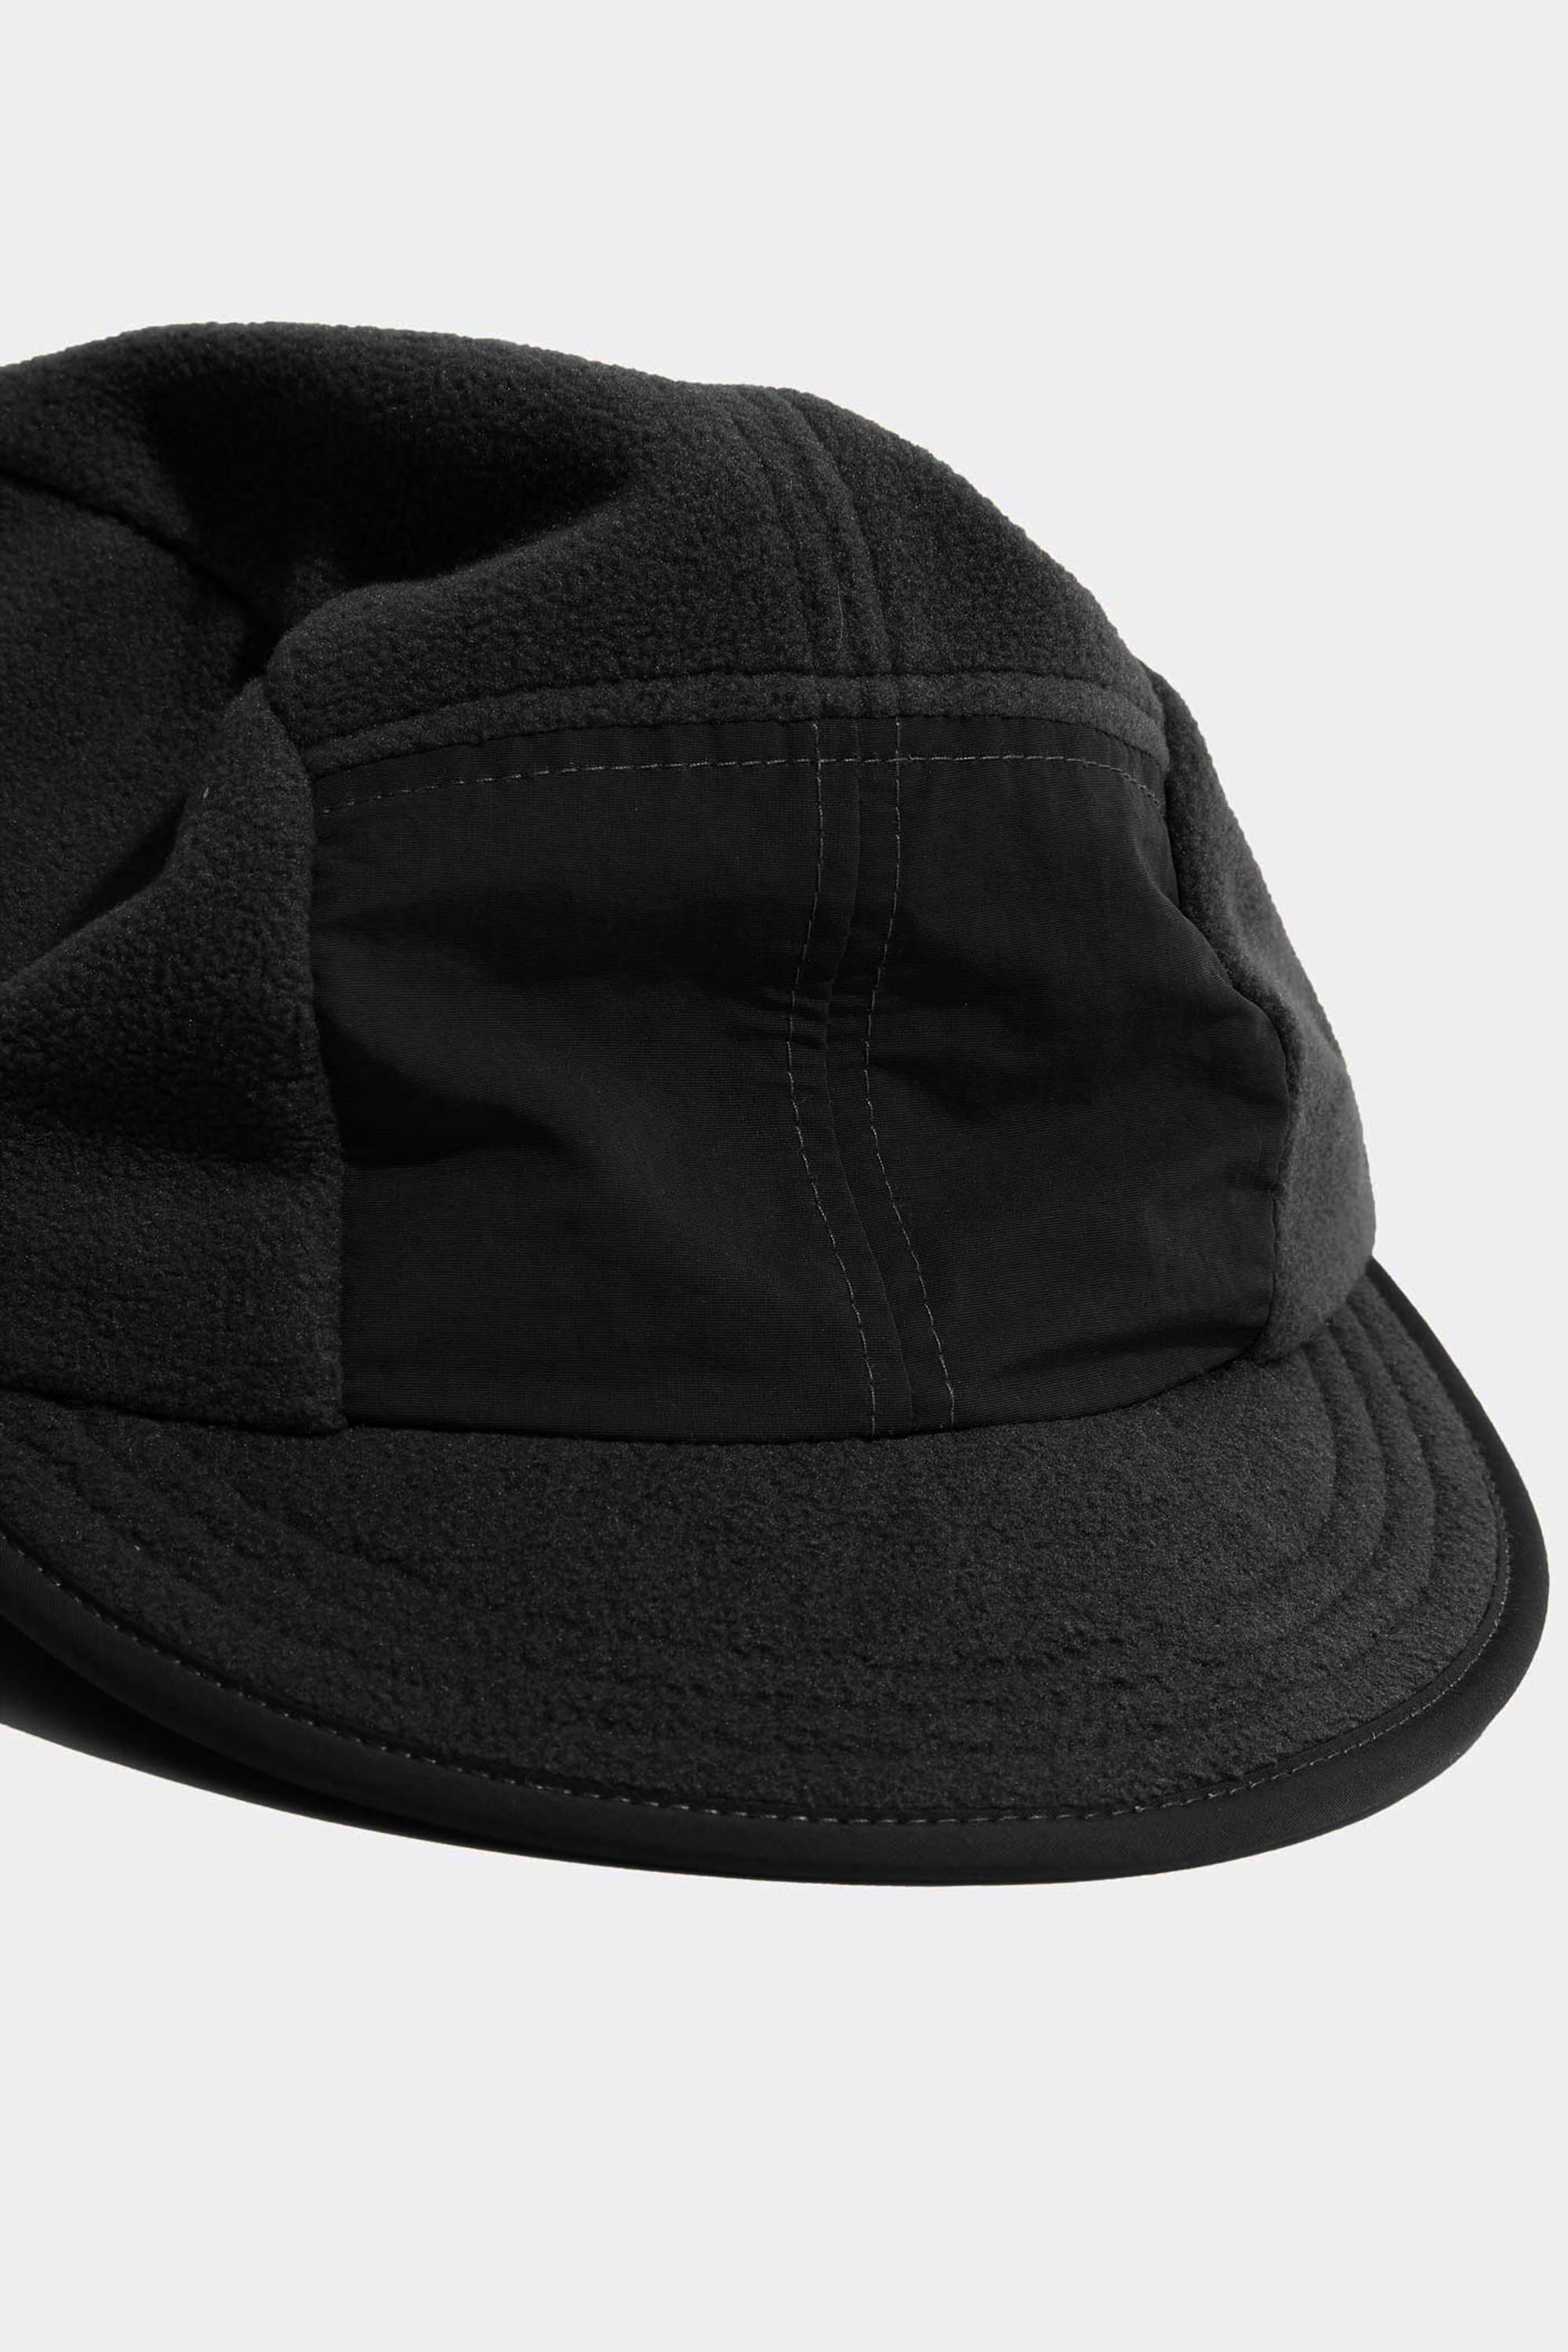 Fleece Run Hat - Black / Adsum